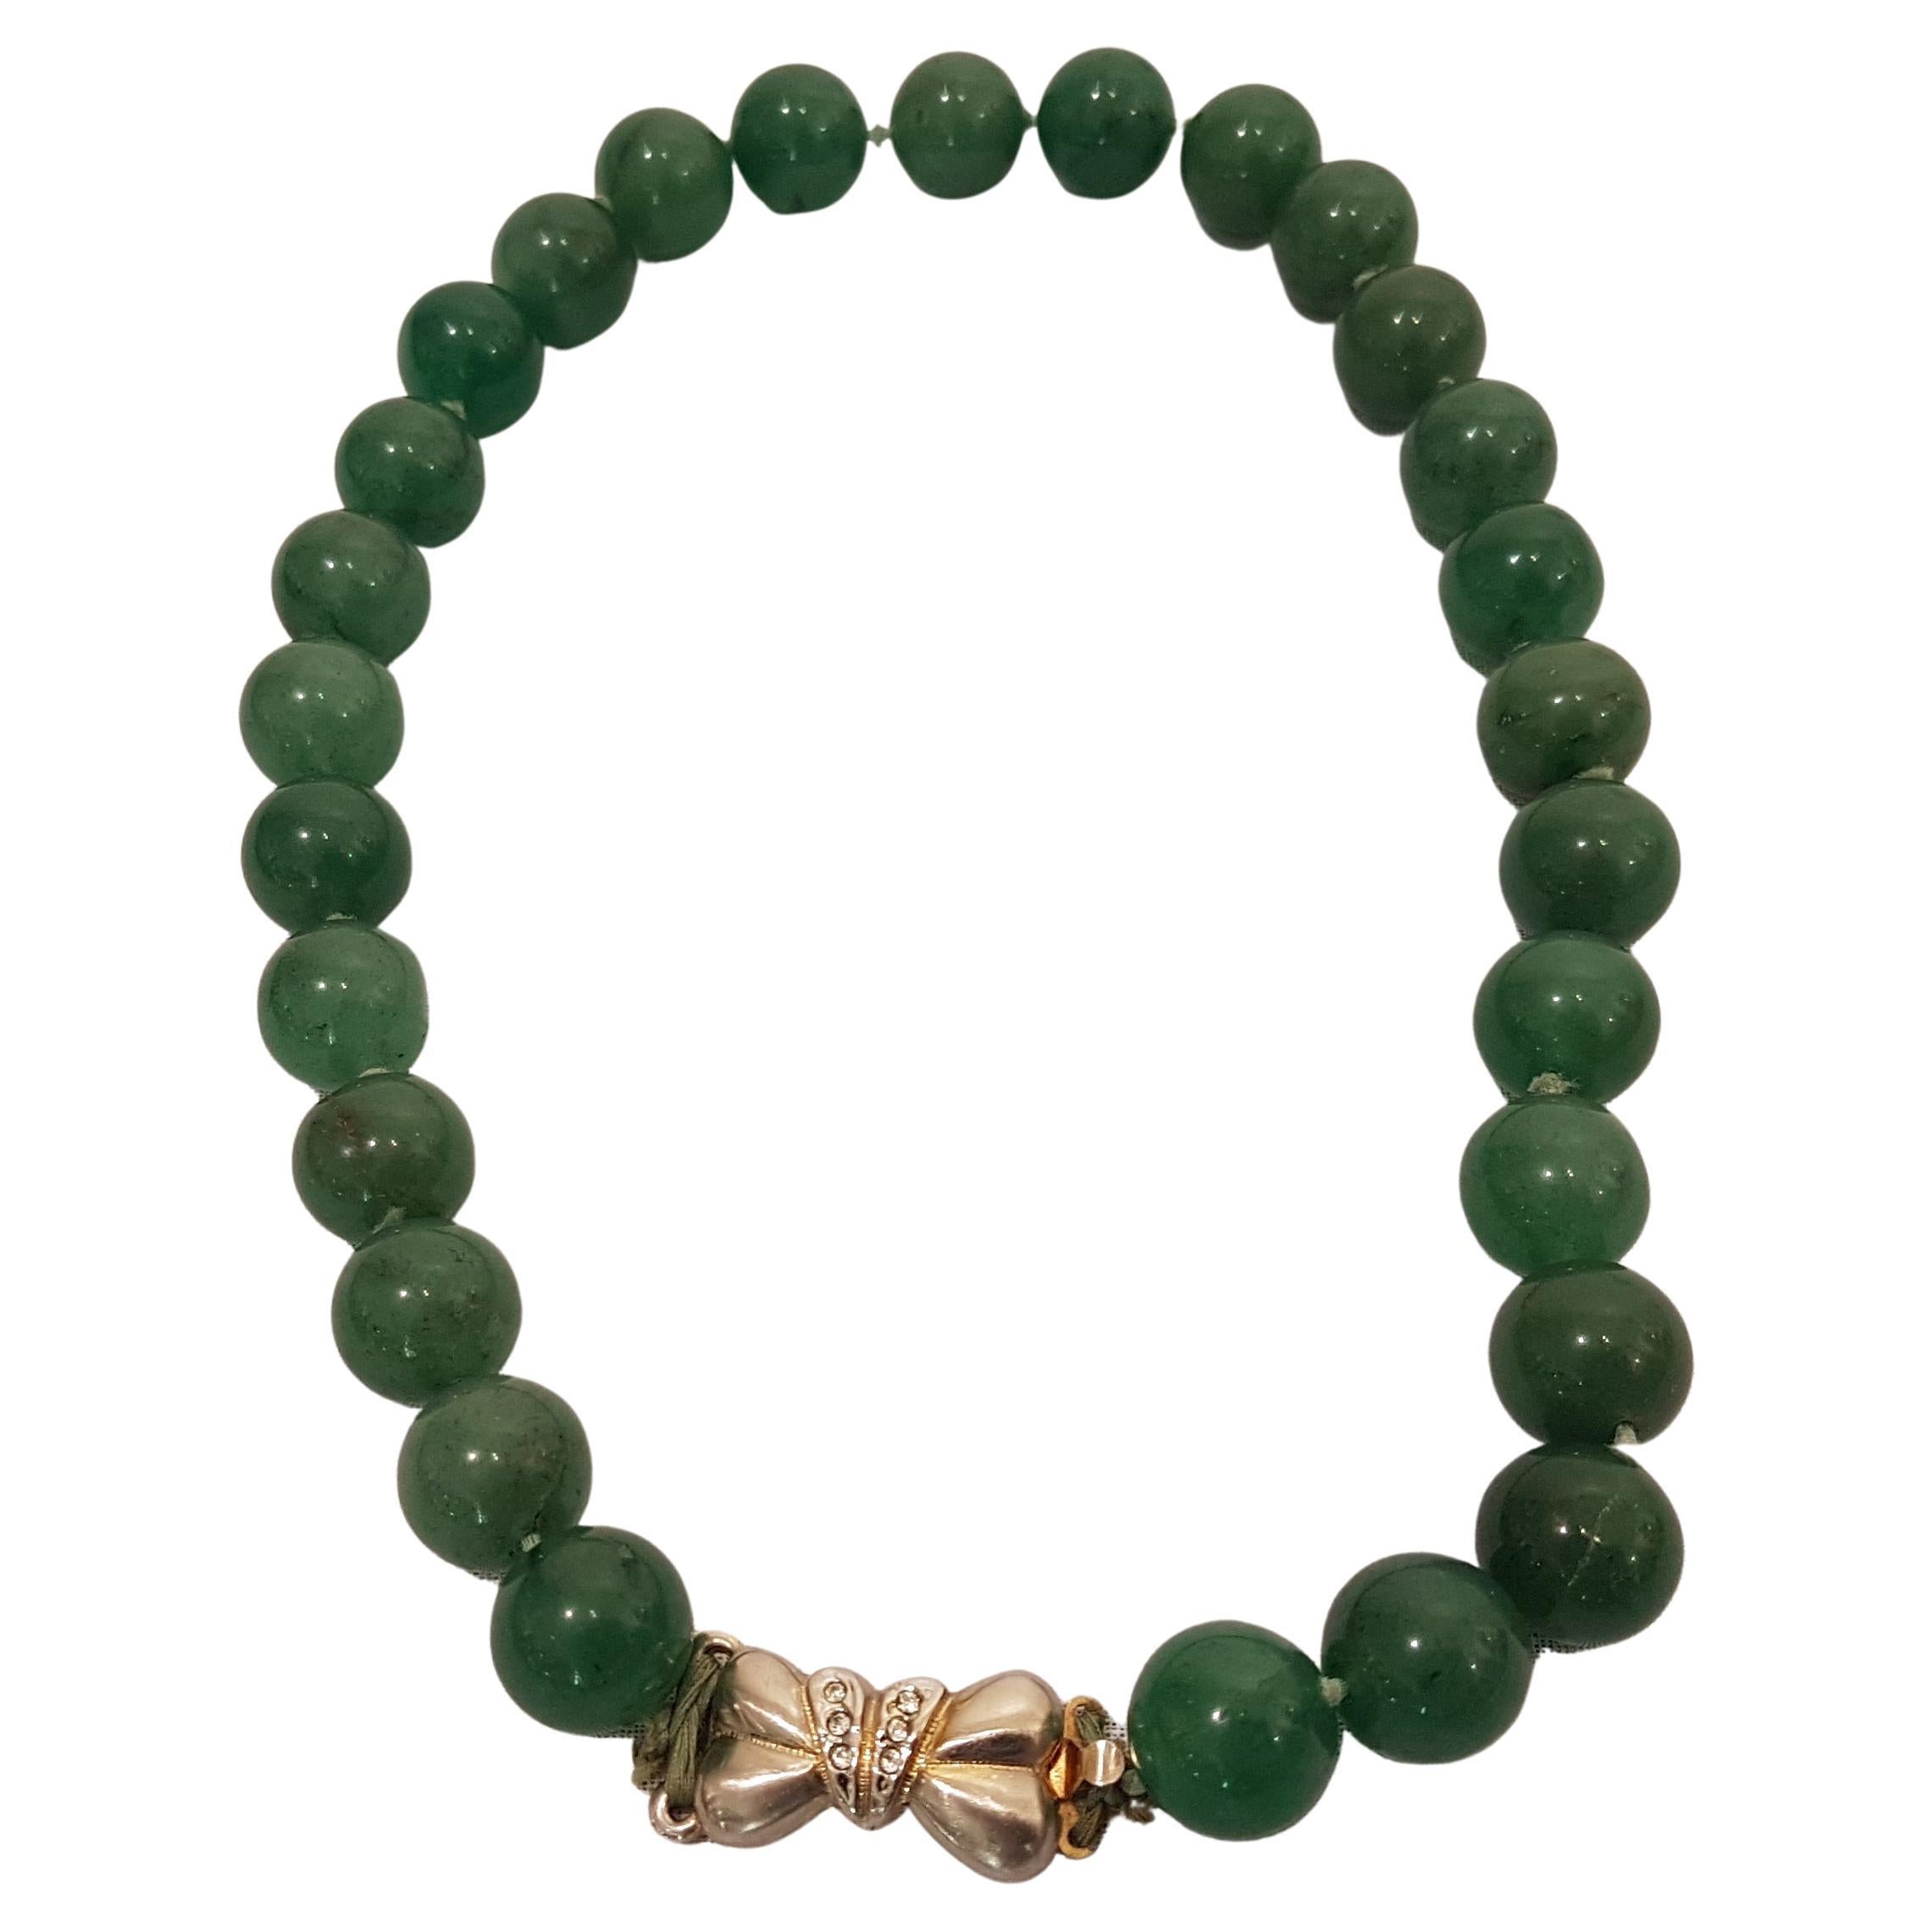 Silver, Vintage Jade Spheres Necklace